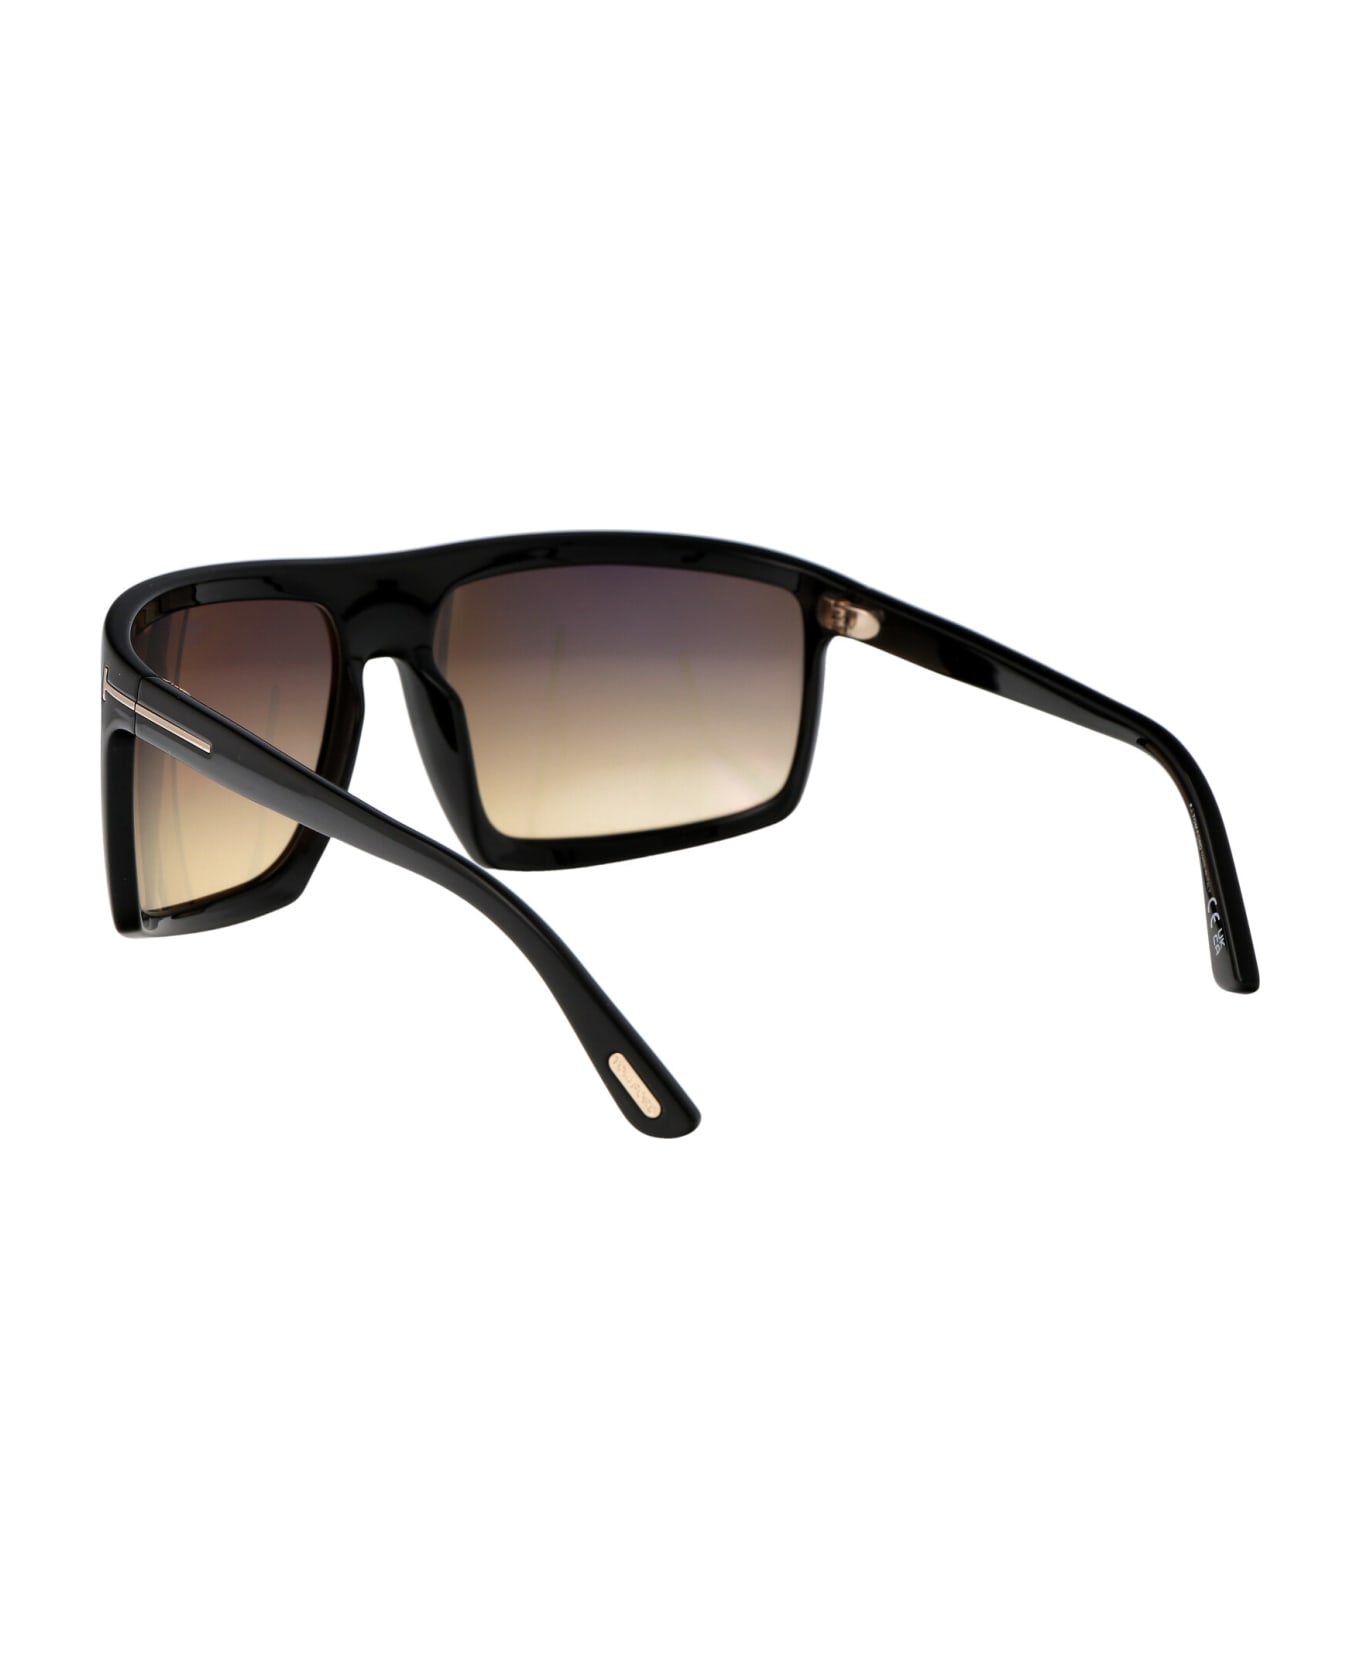 Tom Ford Eyewear Clint-02 Sunglasses - 01B Nero Lucido / Fumo Grad